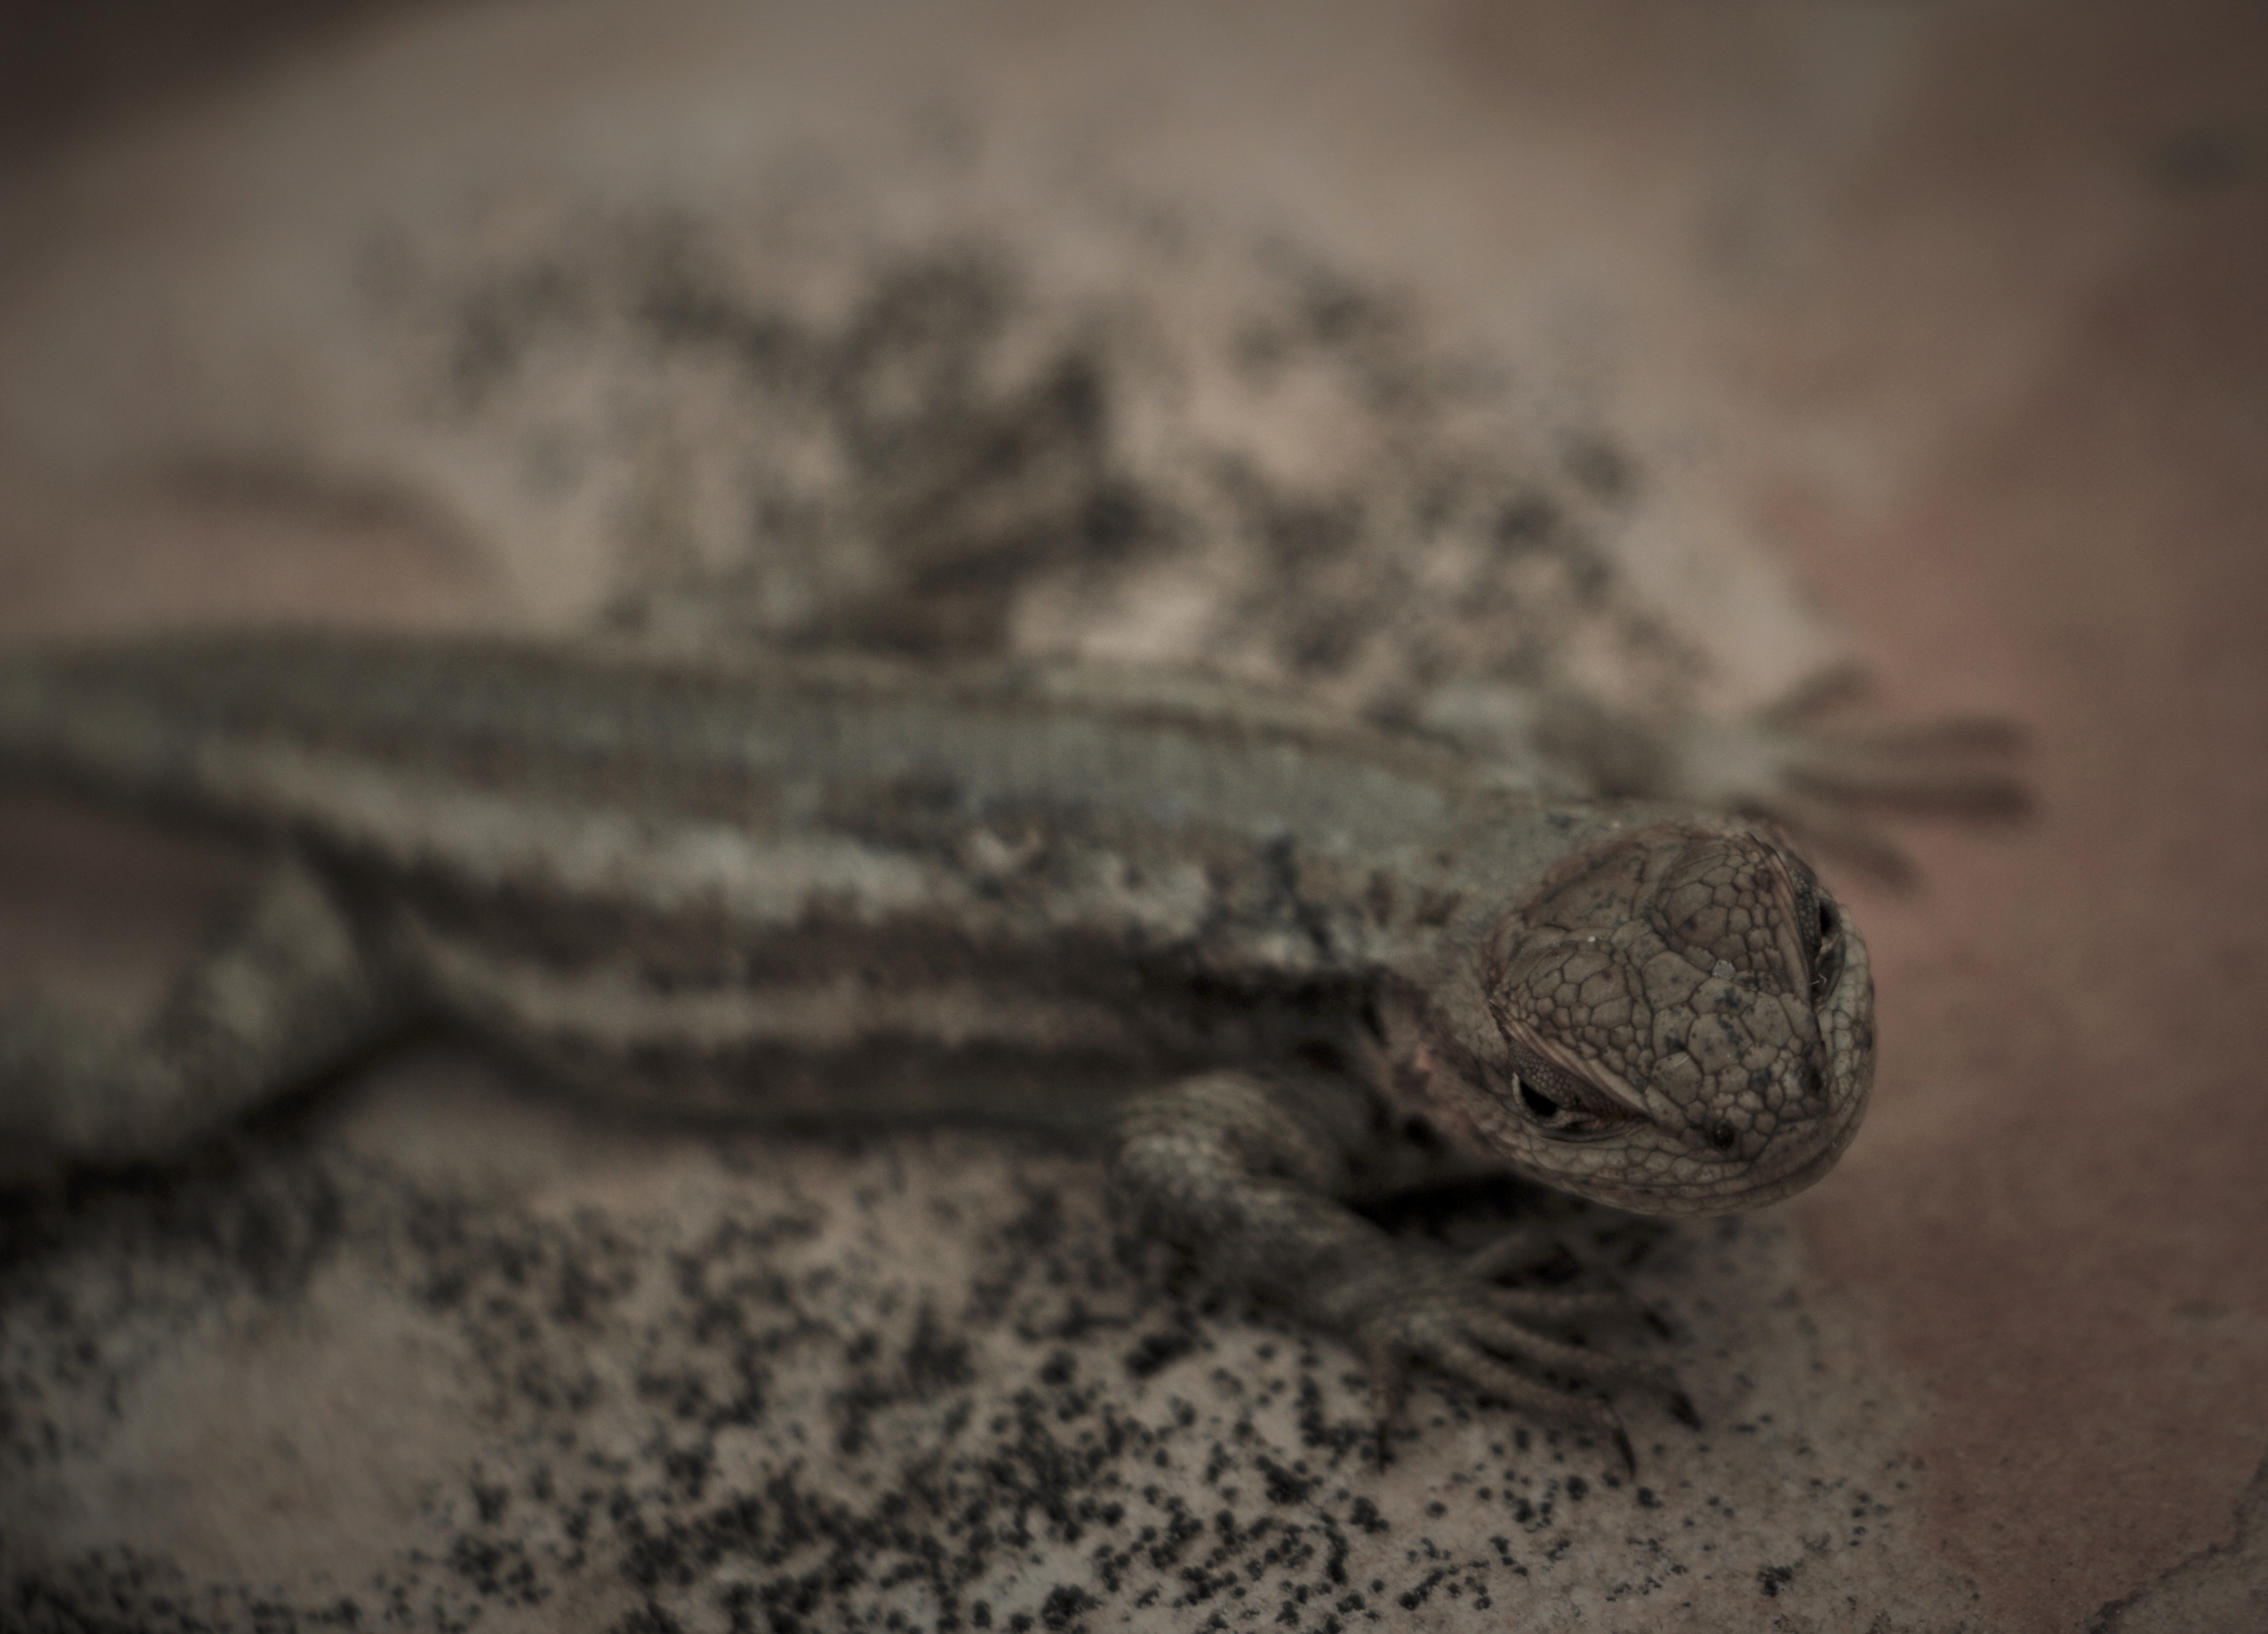 A close up of a lizard